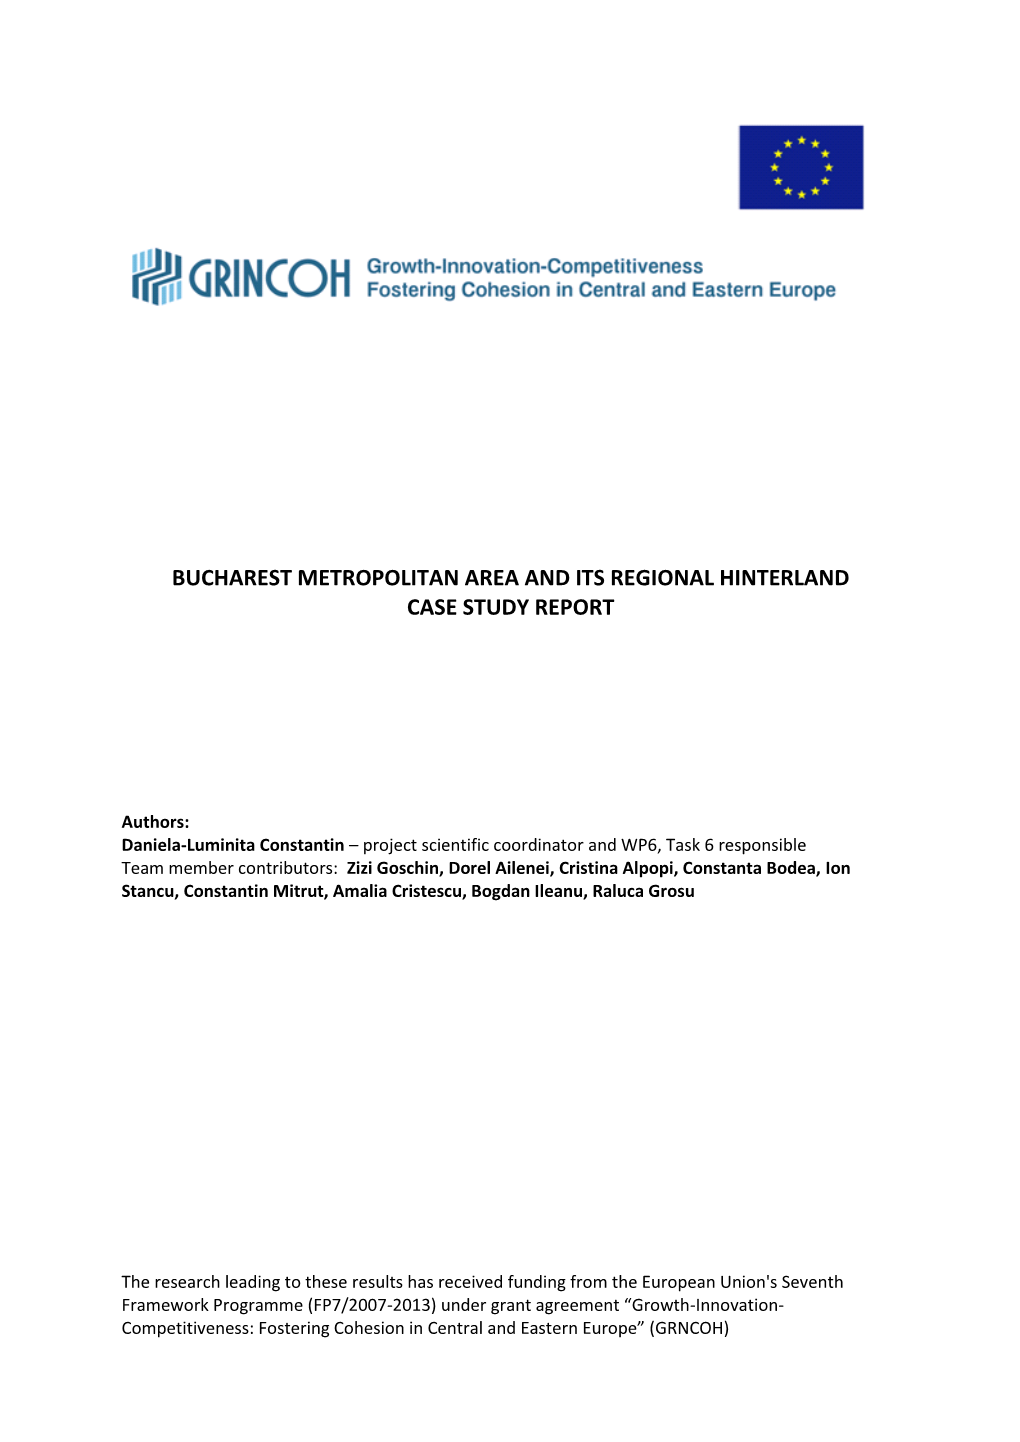 Bucharest Metropolitan Area and Its Regional Hinterland Case Study Report